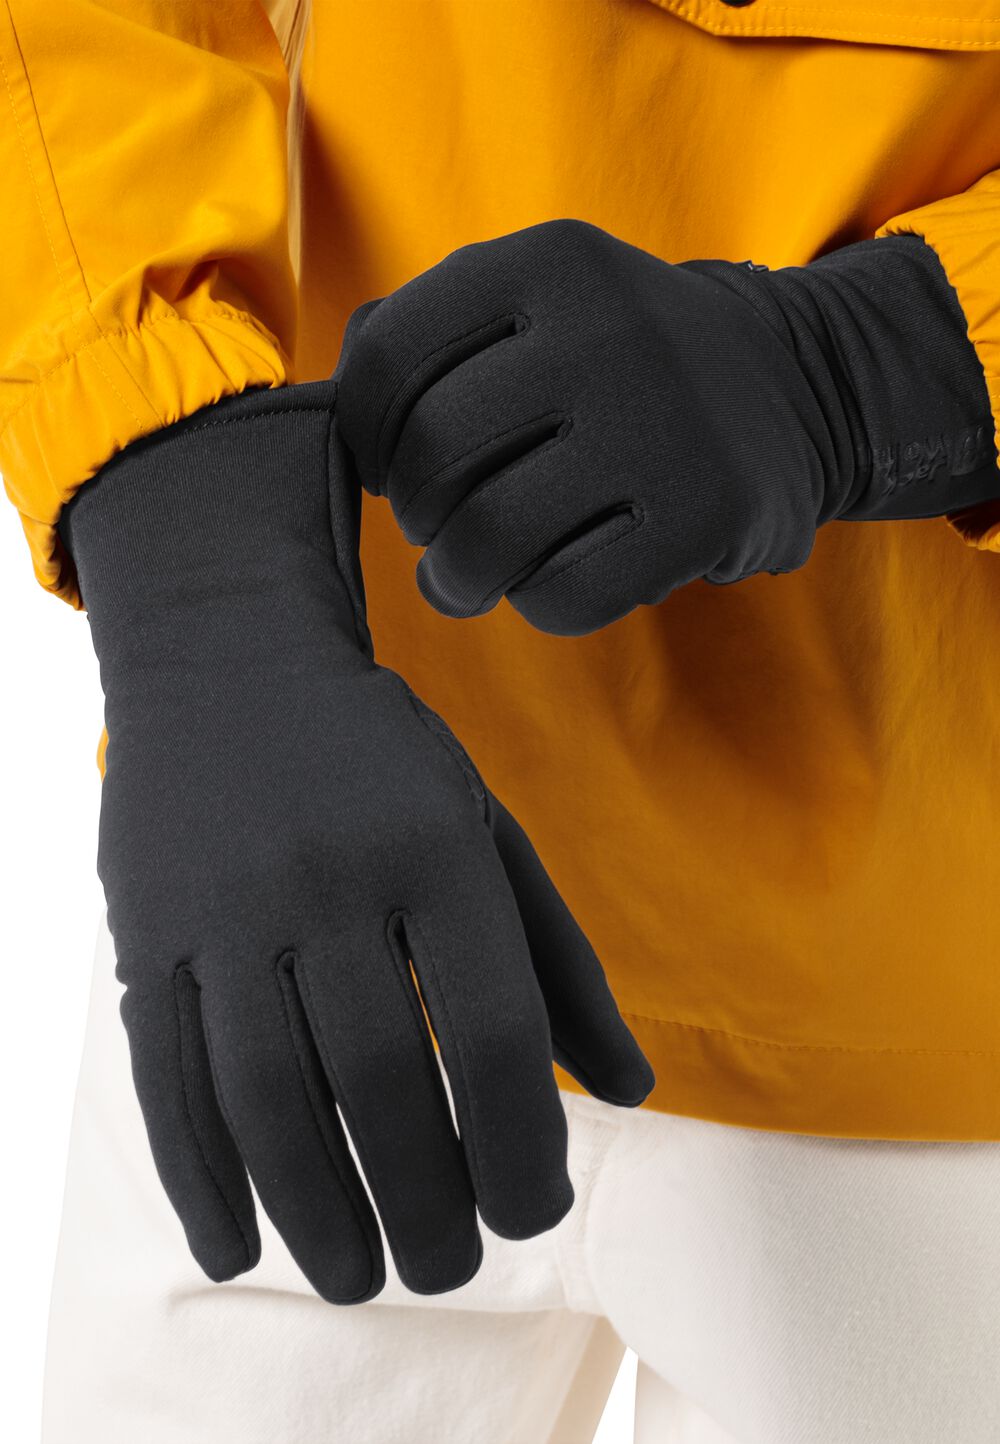 Jack Wolfskin Allrounder Glove Fleece handschoenen S zwart black